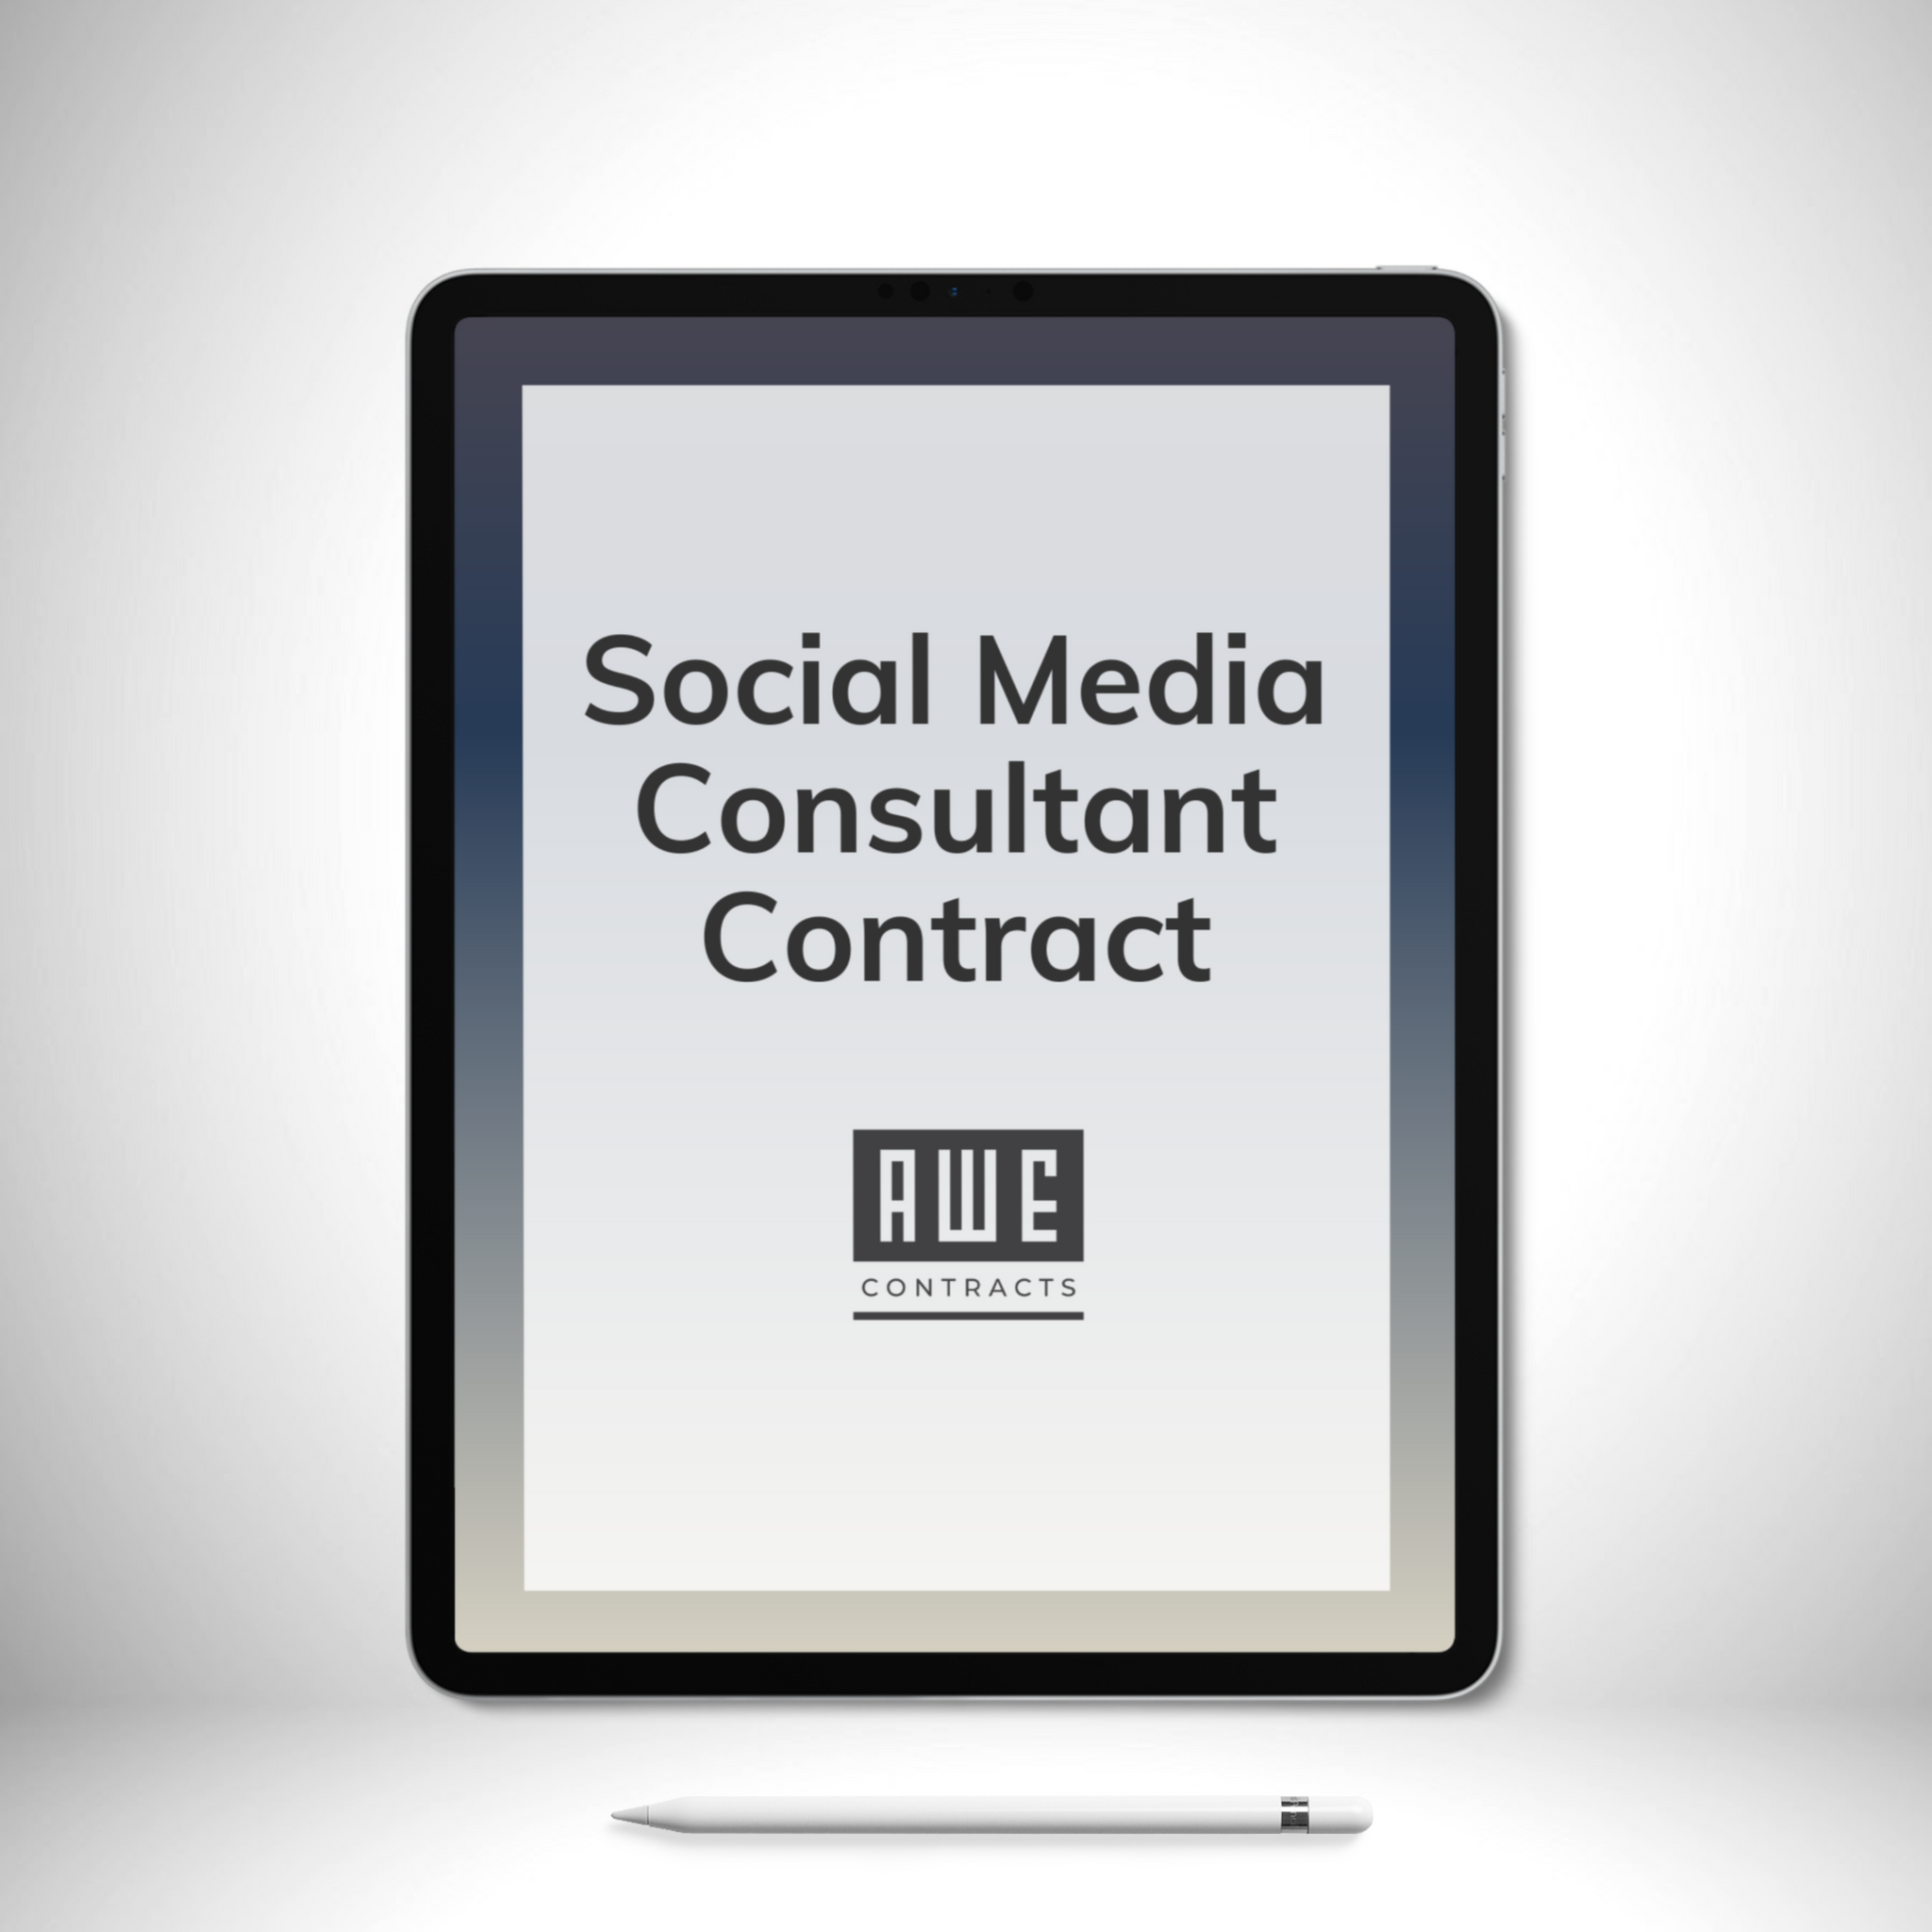 Social Media Consultant Contract